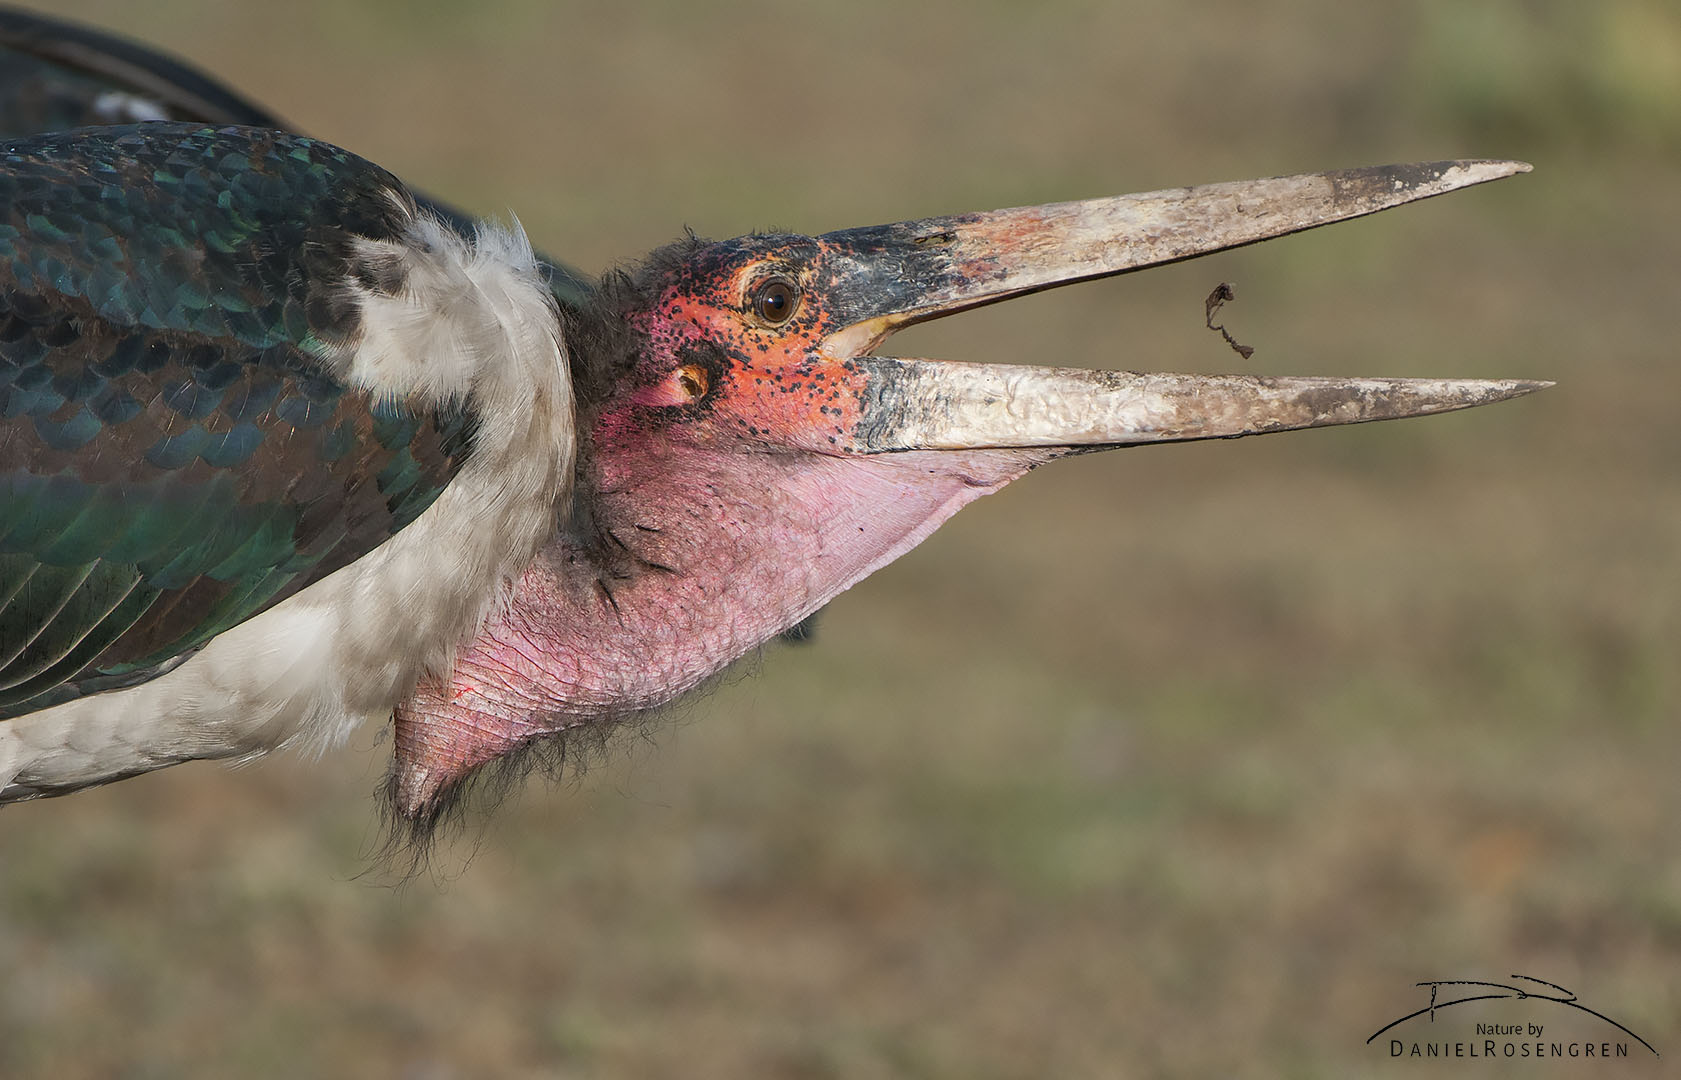 A Marabou stork throwing a small piece of meat into its giant beak. © Daniel Rosengren